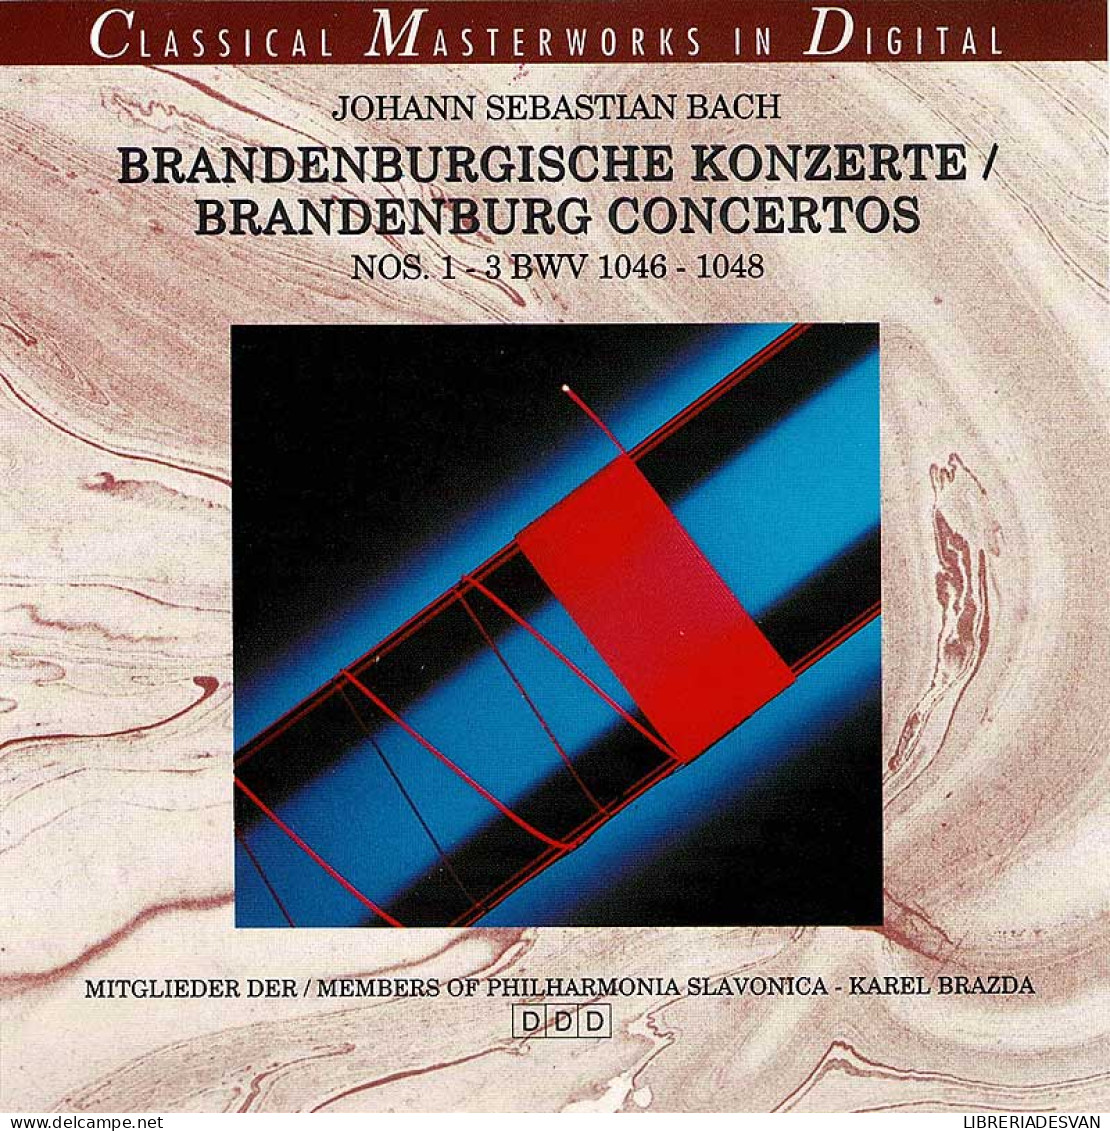 Johann Sebastian Bach - Brandenburg Concertos. CD - Classical